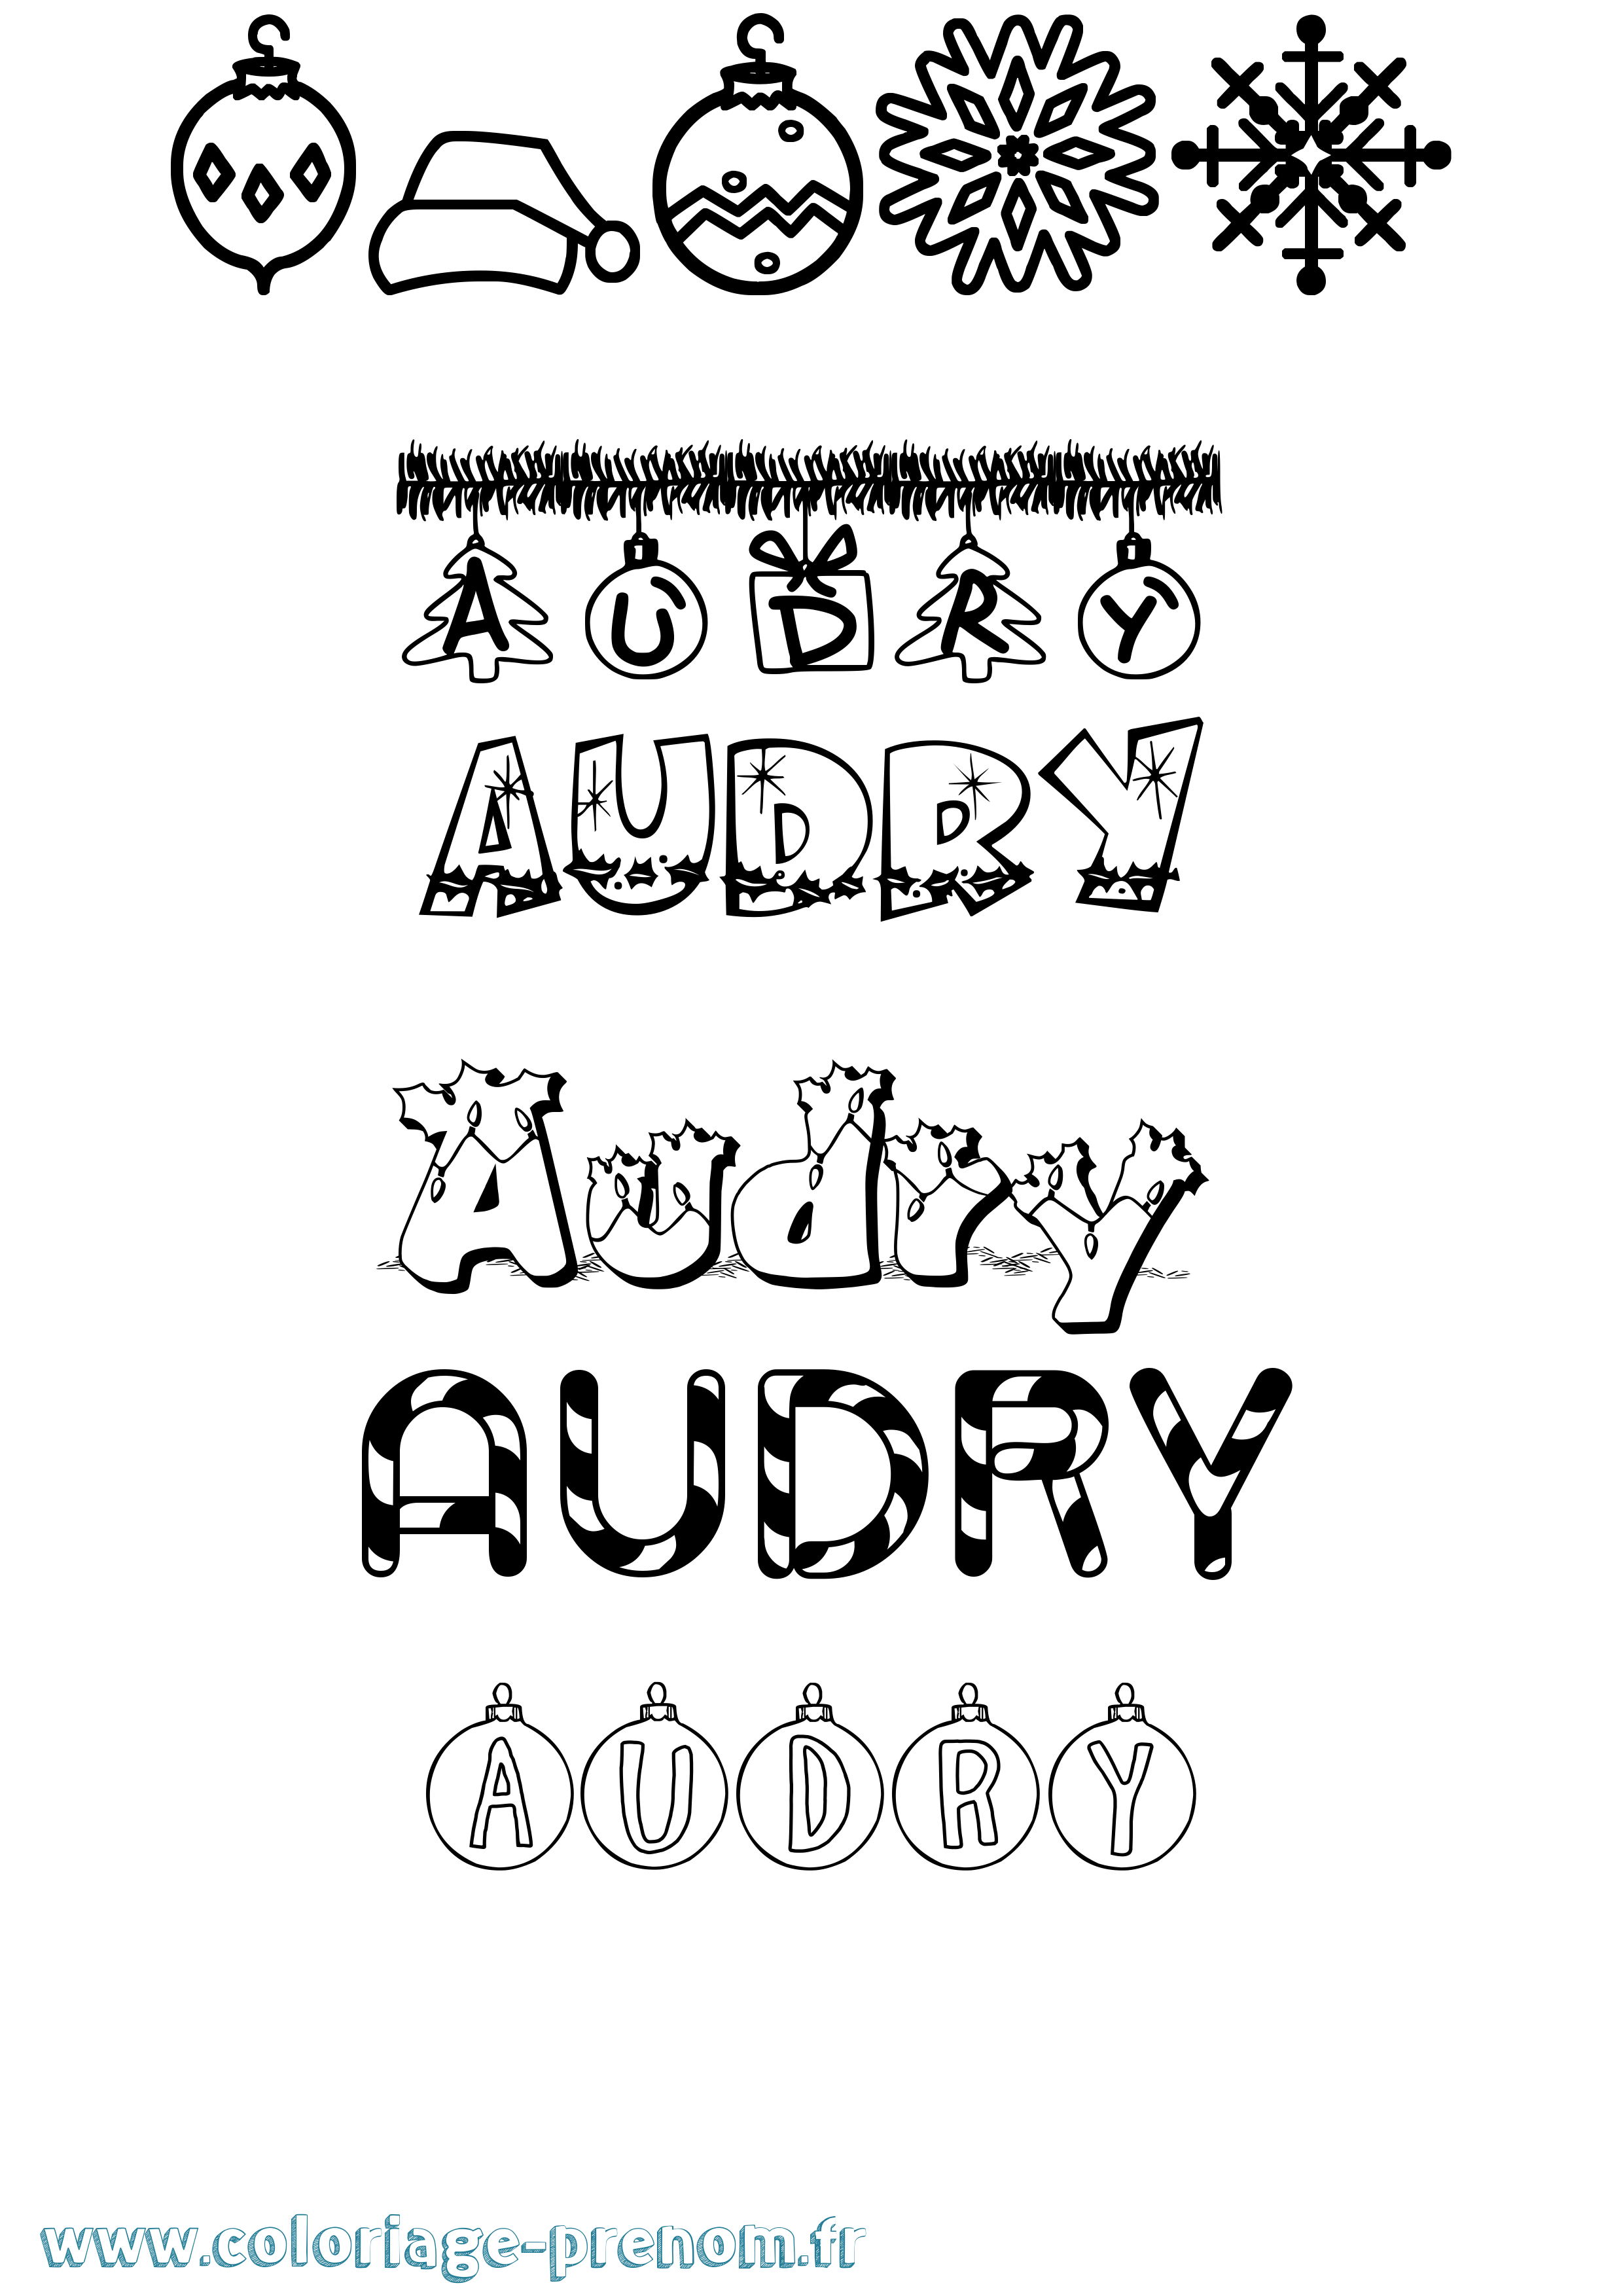 Coloriage prénom Audry Noël